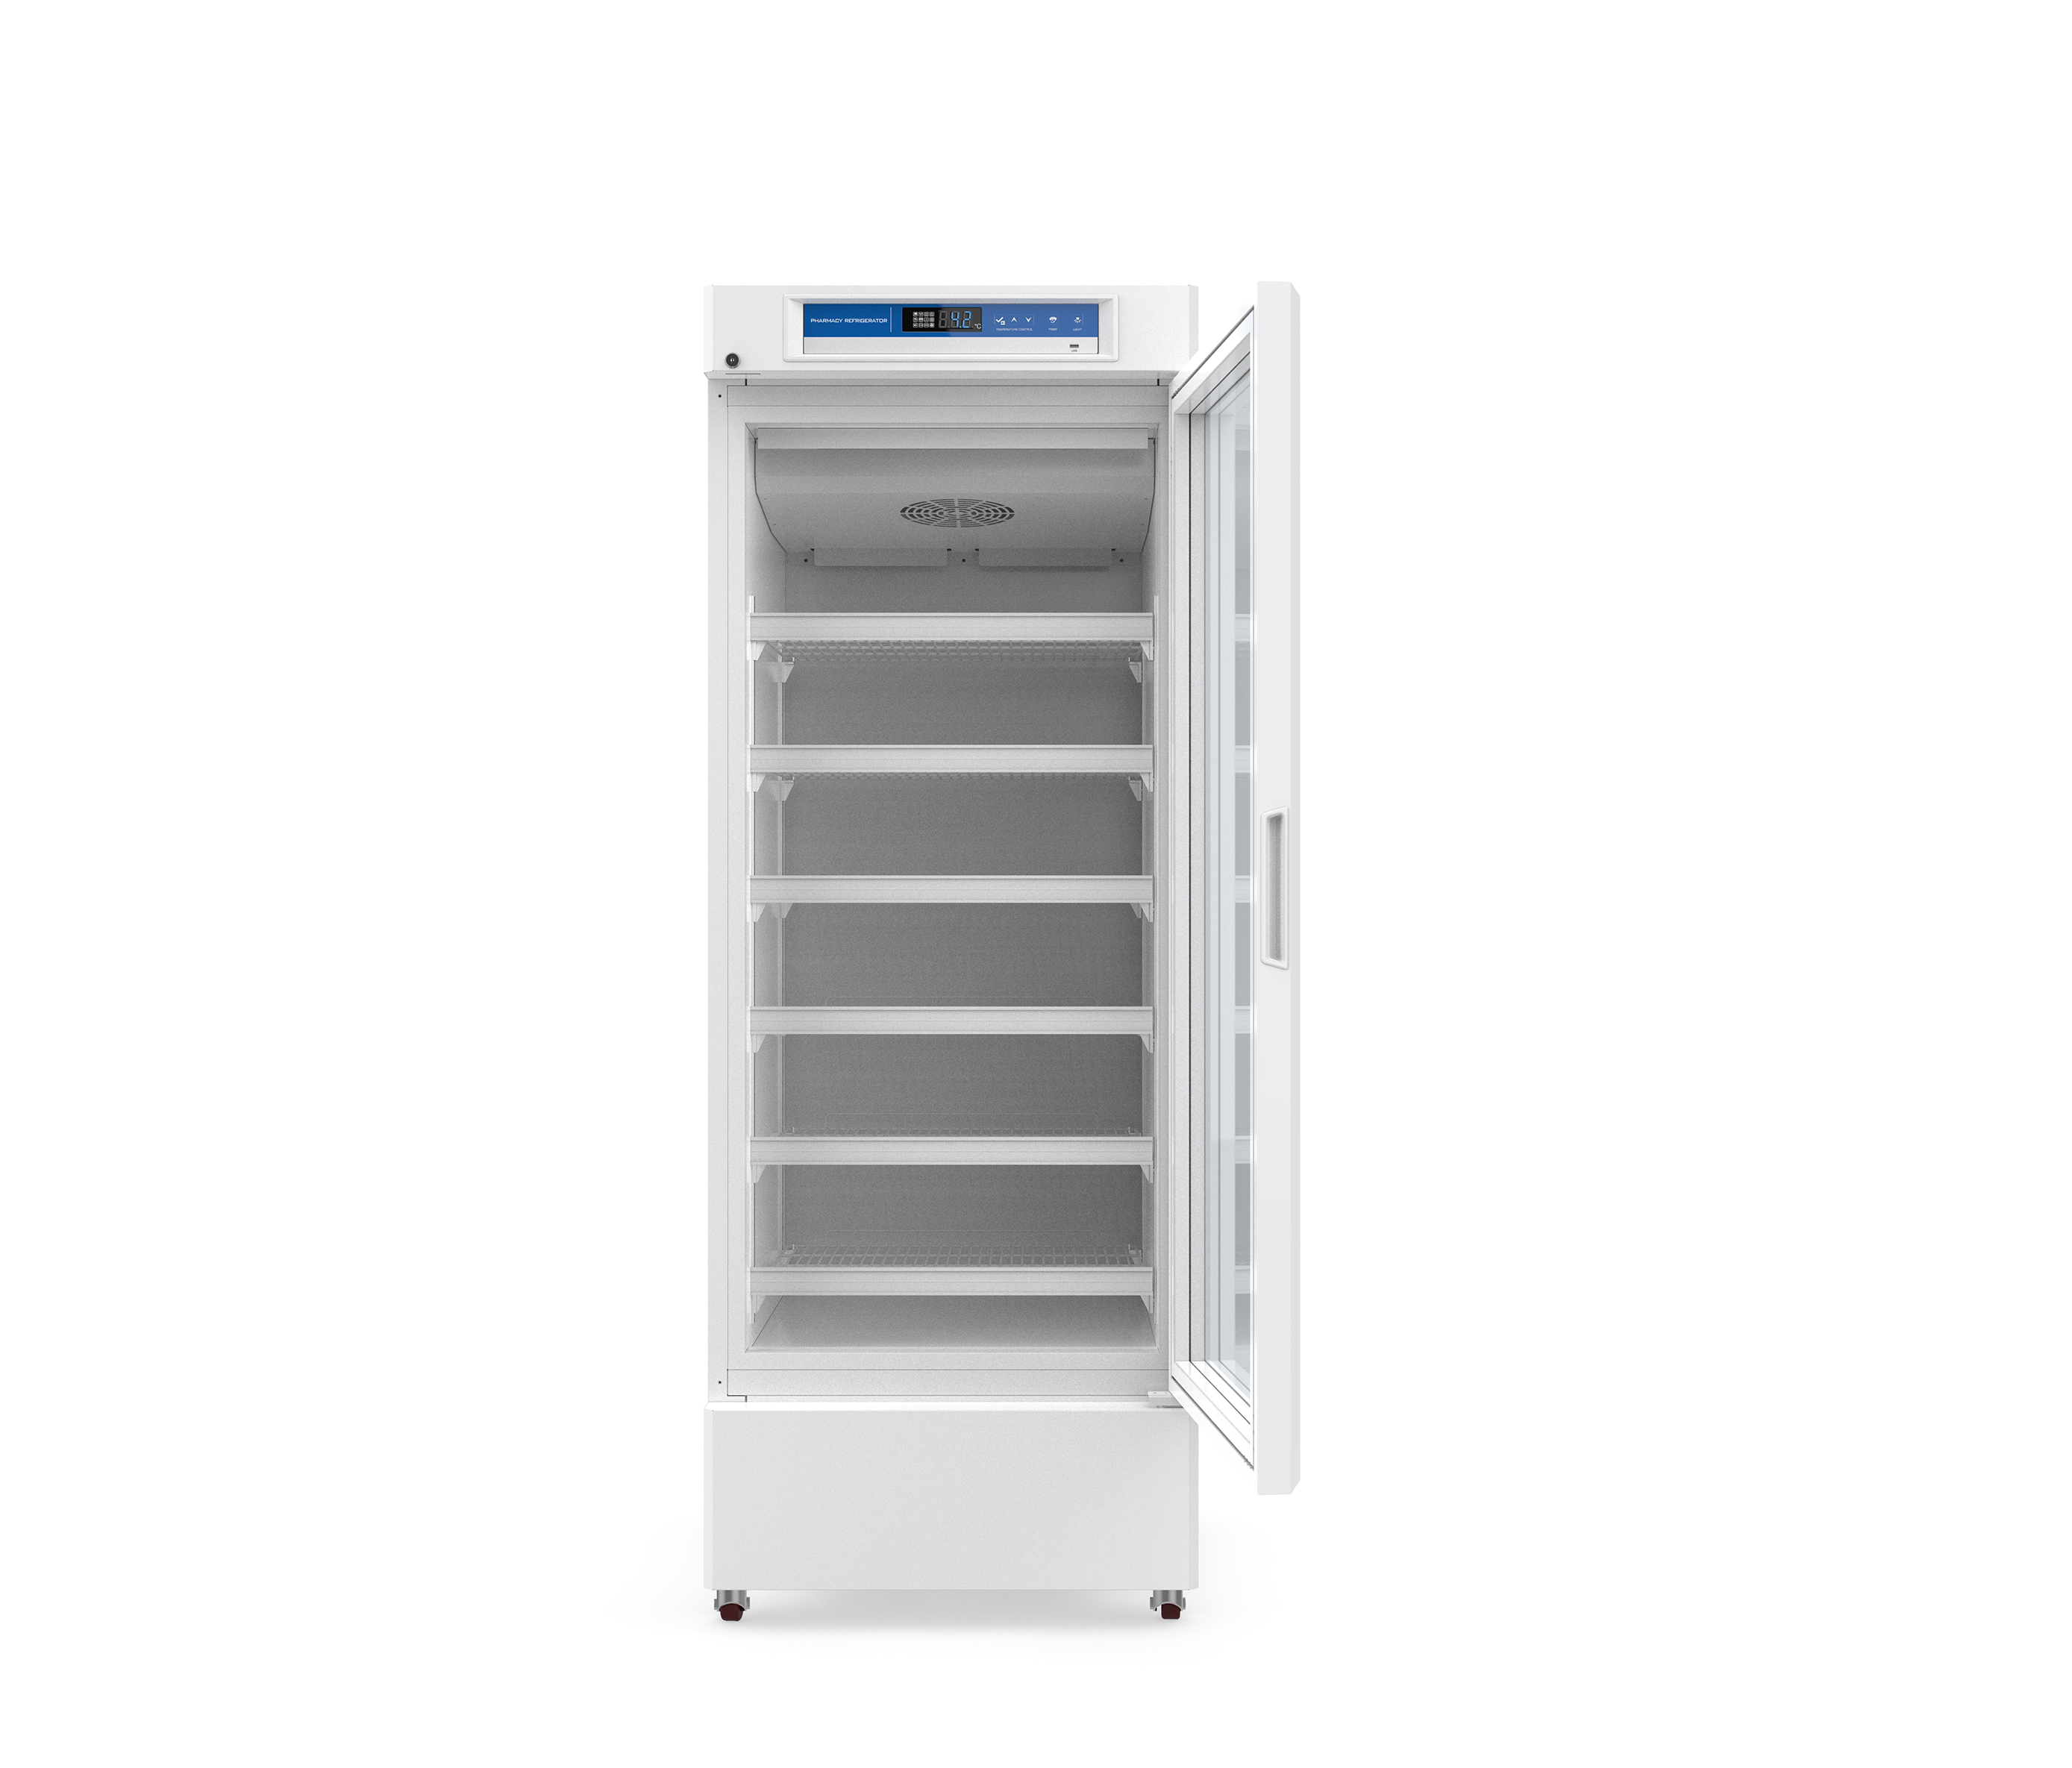 MS-PR5000 Medical pharmacy refrigerator 